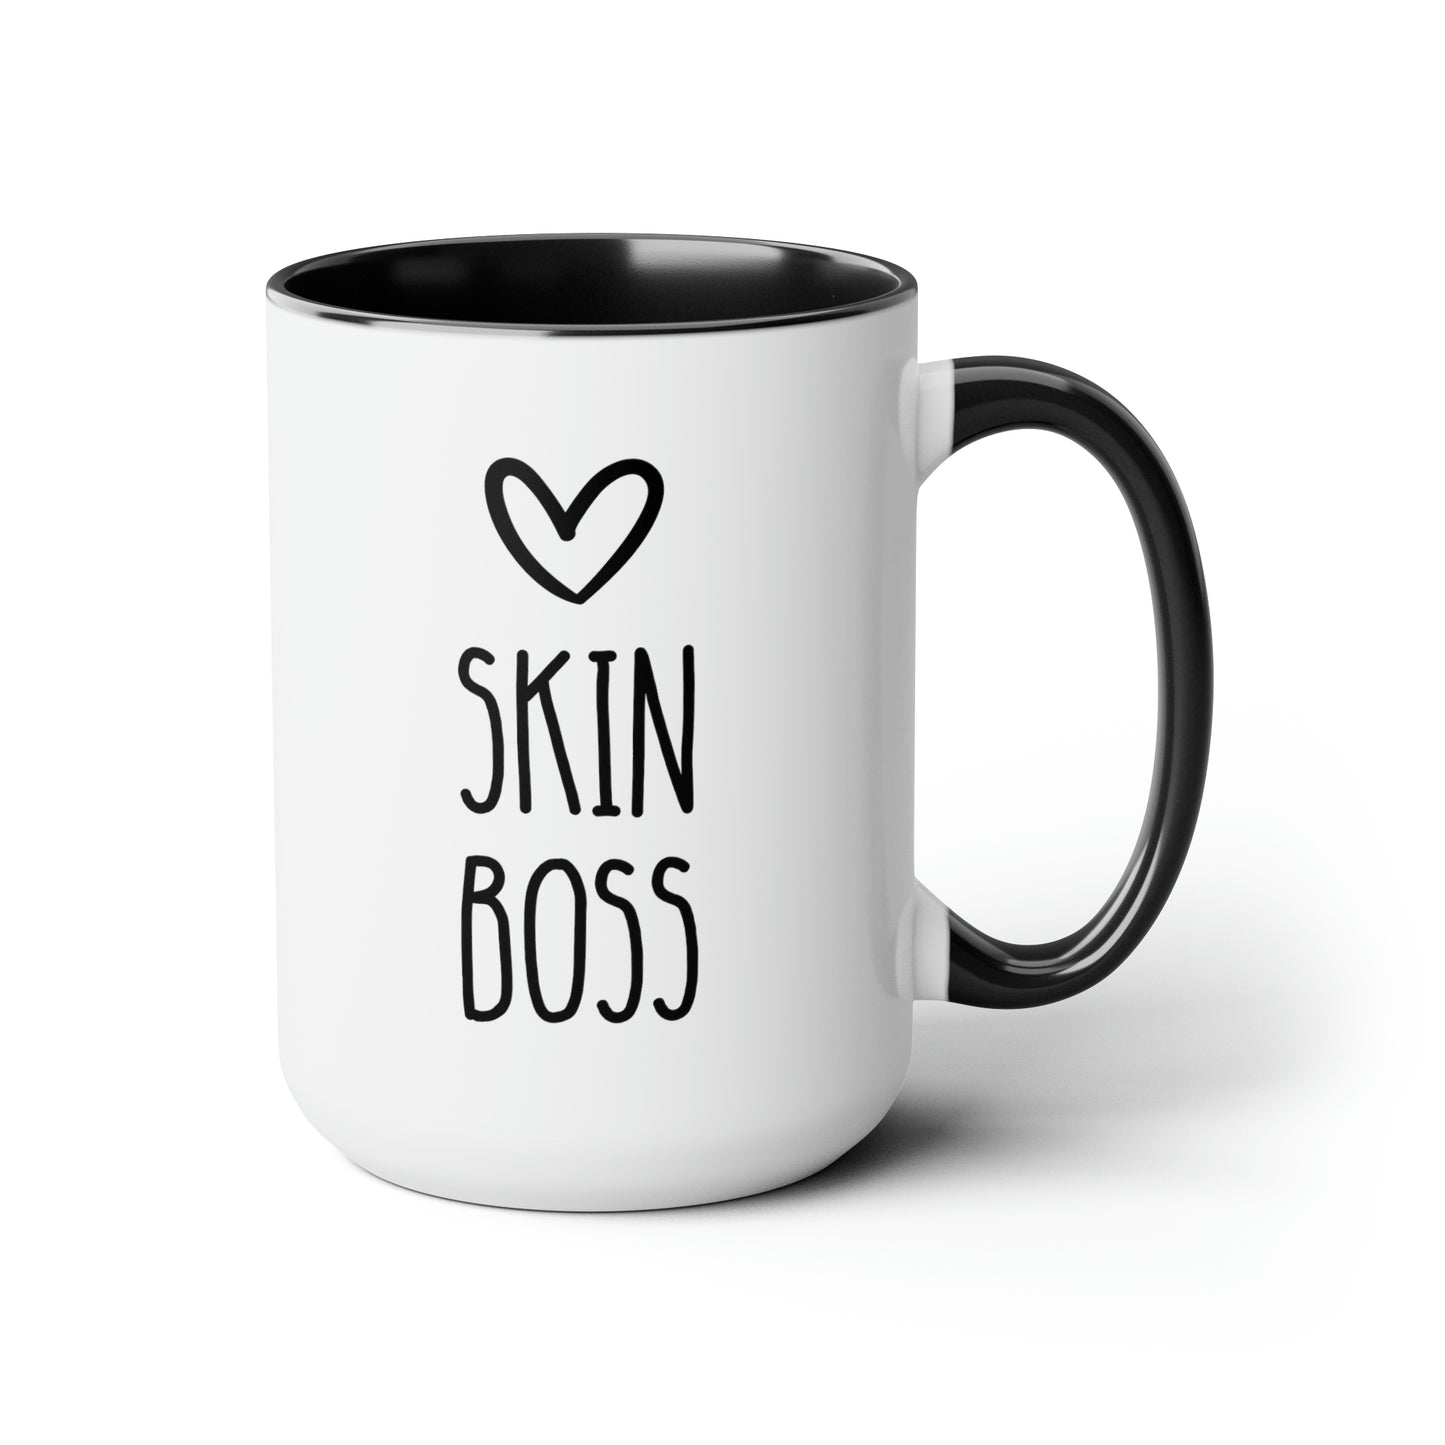 skin boss 15oz white with black accent large mug funny coffee mug tea cup large mug gift for dermatologist beautician aesthetician waveywares wavey wares 